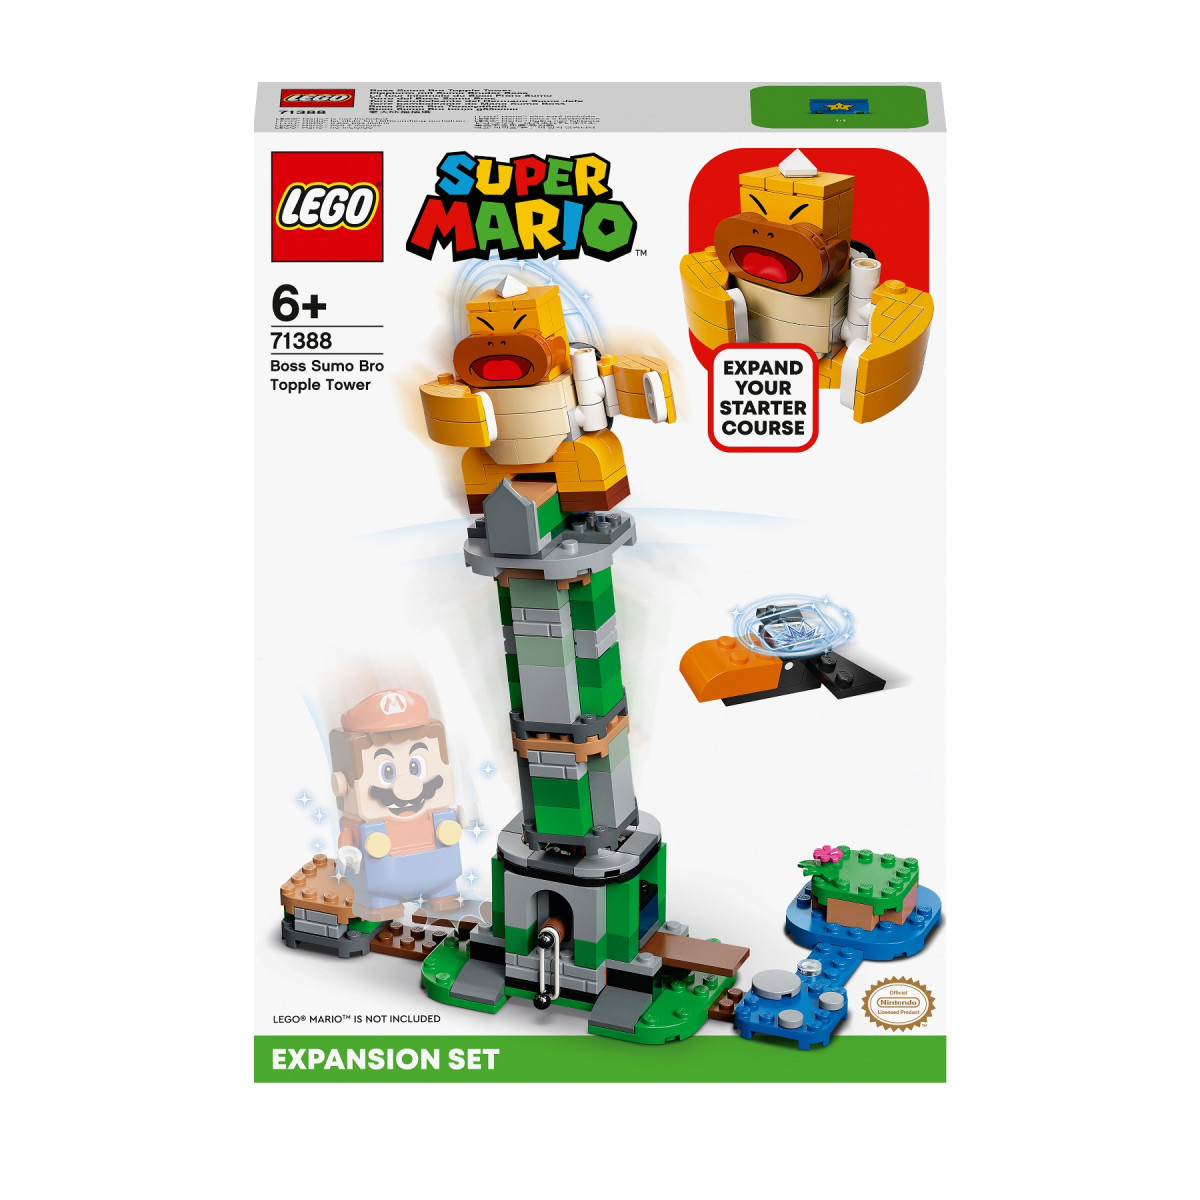 LEGO Super Mario Boss Sumo Bro Topple Tower Expansion Set - 71388